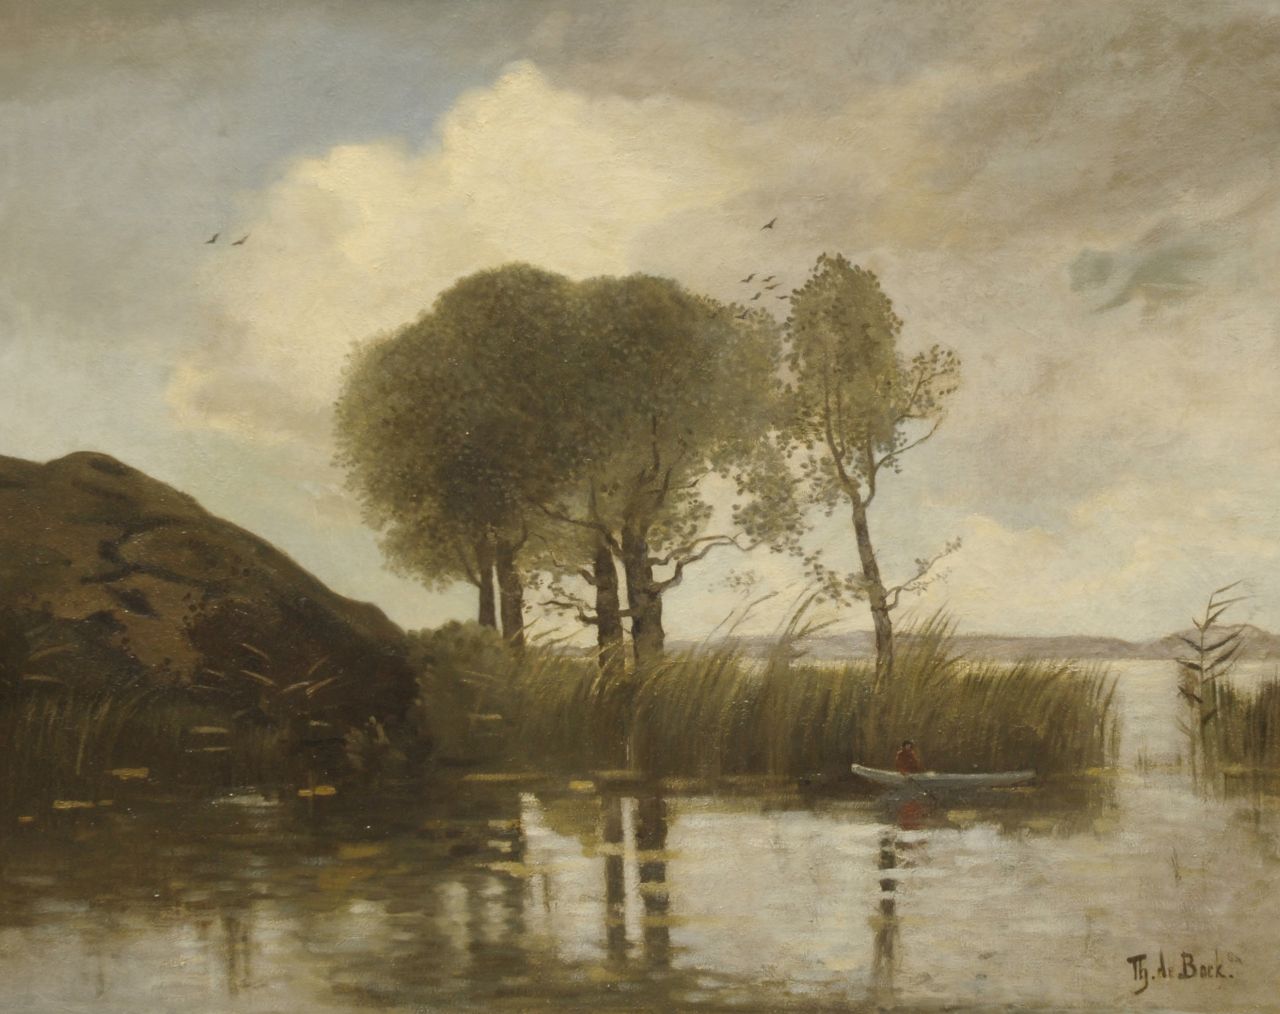 Bock T.E.A. de | Théophile Emile Achille de Bock, Trees near the waterfront with small fishingboat, oil on canvas 99.5 x 121.5 cm, signed l.r.